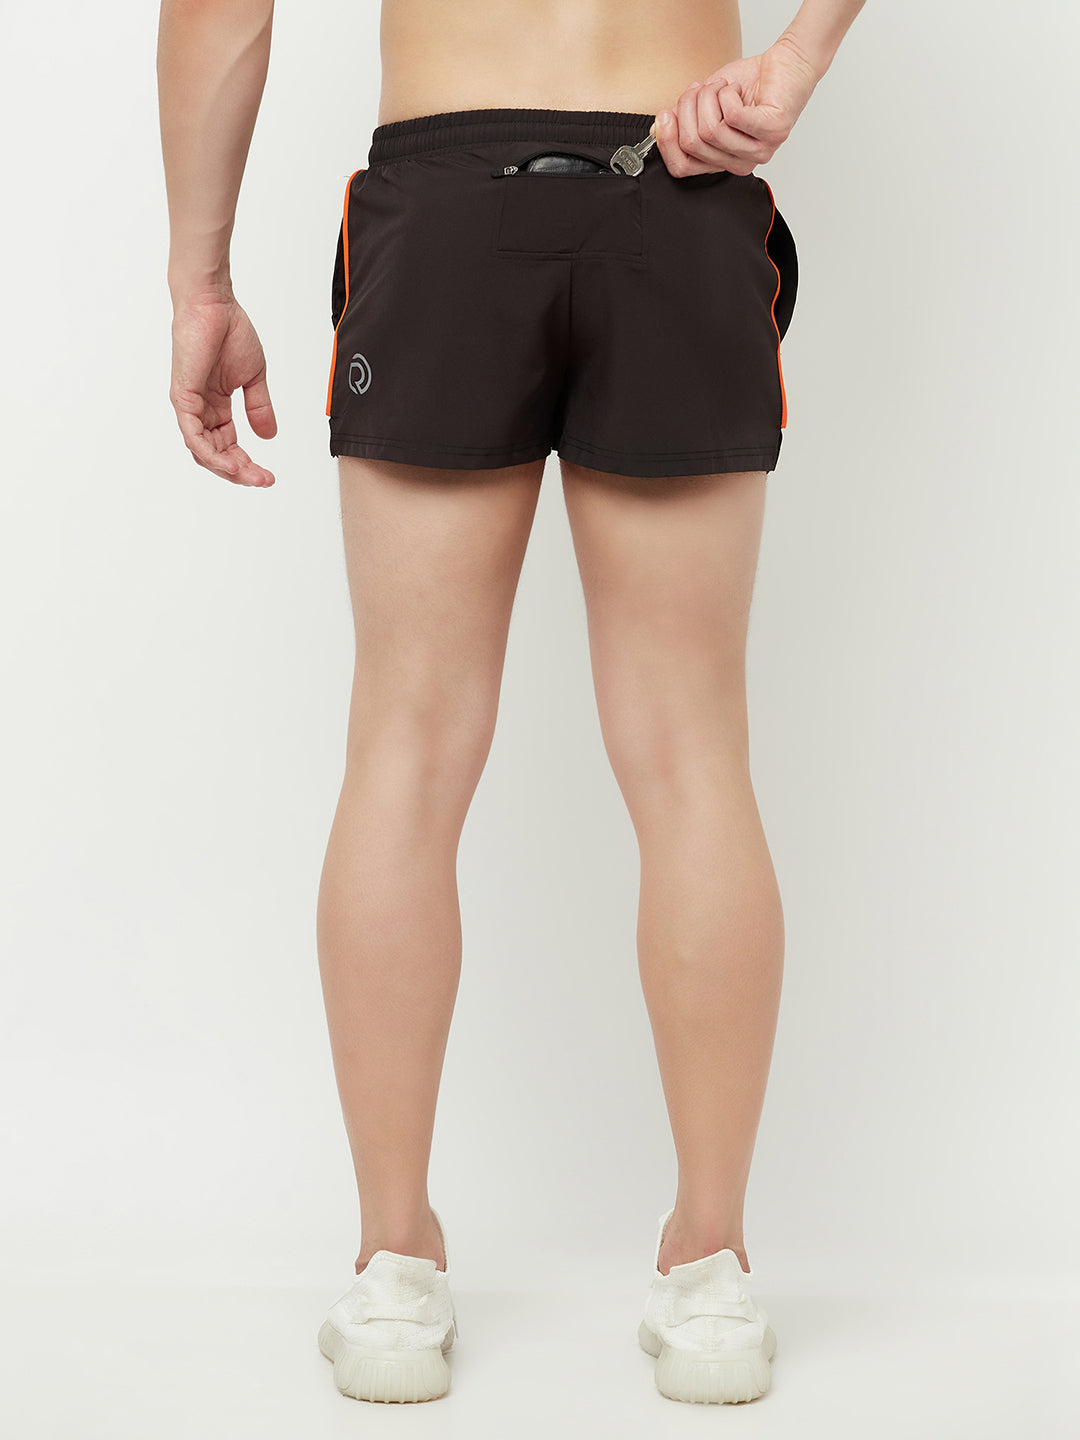 Men's Sports Shorts with Zipper Pocket- Black TRUEREVO™